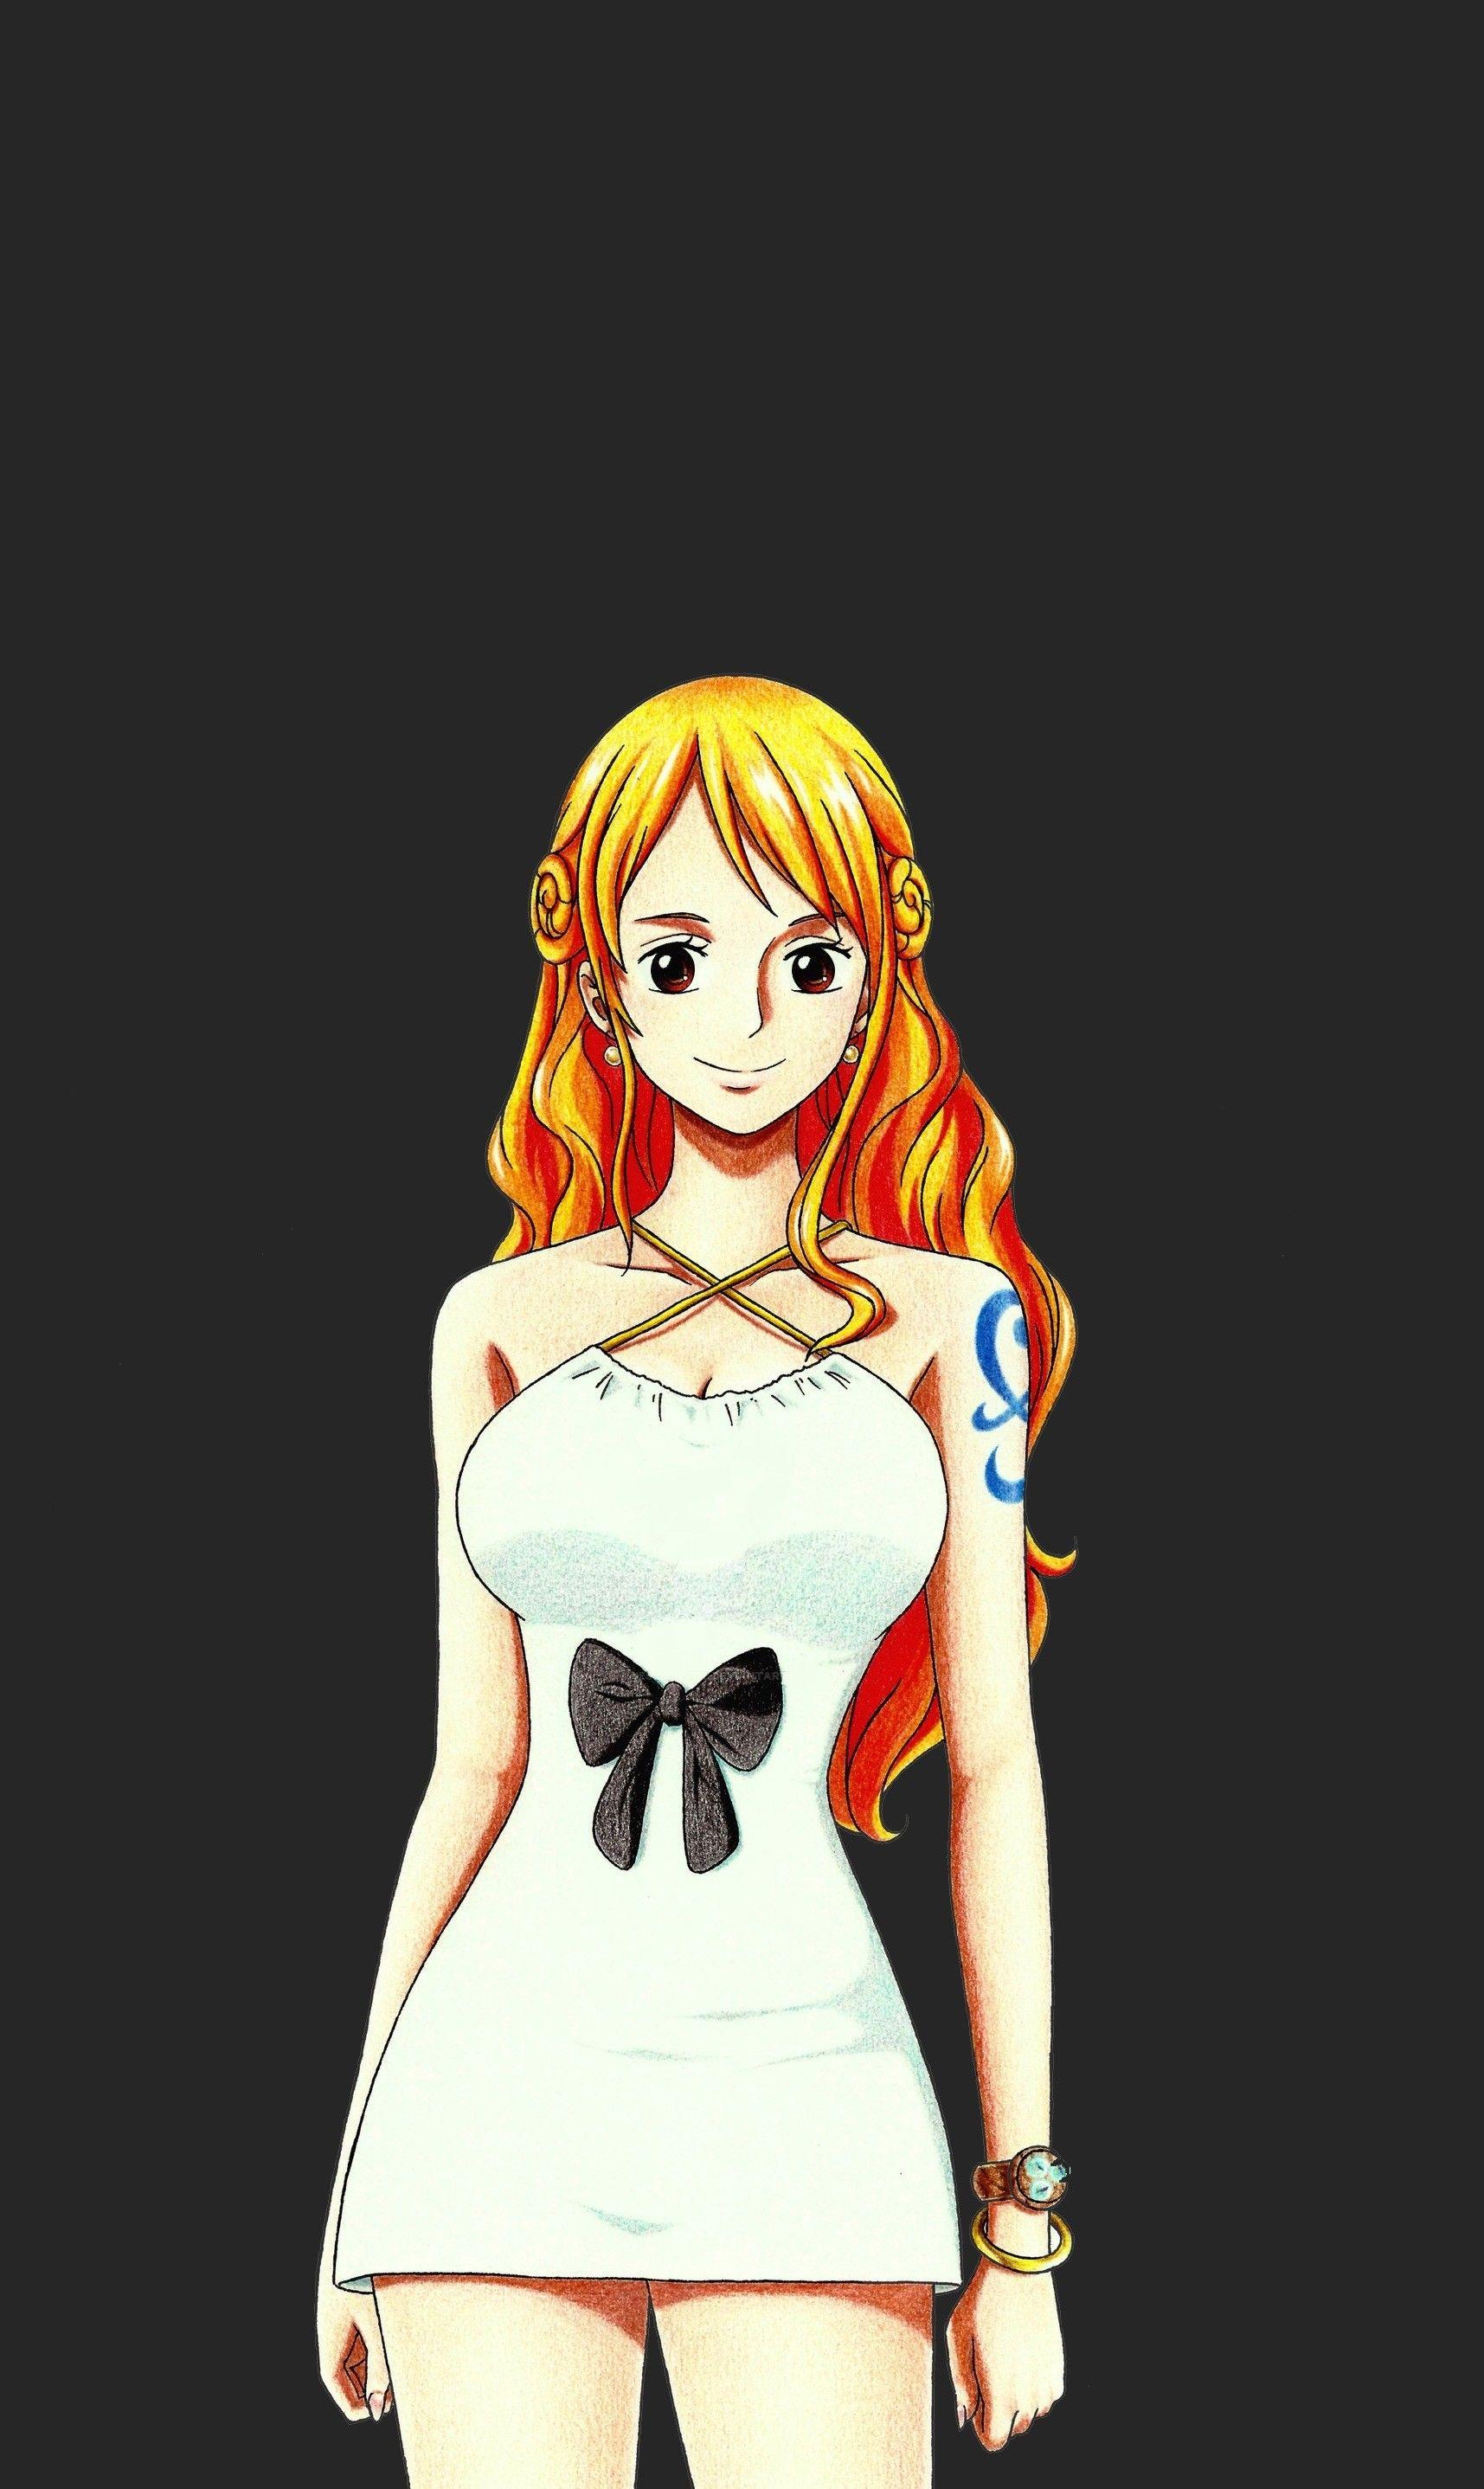 Wallpaper Anime One Piece: Nami Wallpaper 1080p Labzada Wallpaper